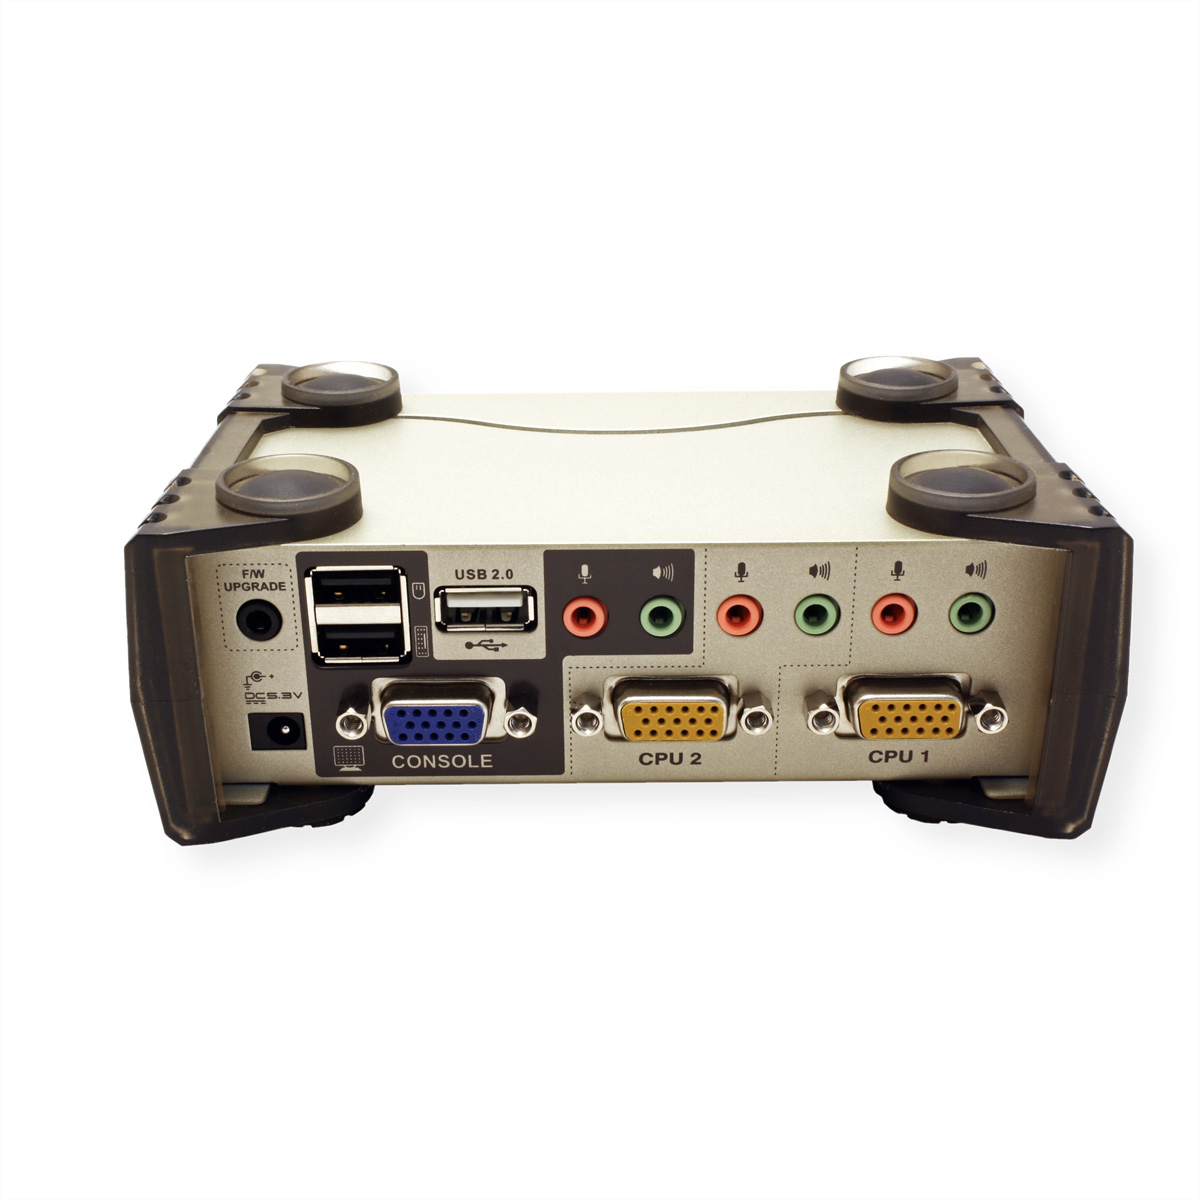 USB-Hub, Audio, VGA VGA, 2 PS/2-USB, ATEN Switch CS1732B KVM KVM-Switch, Ports